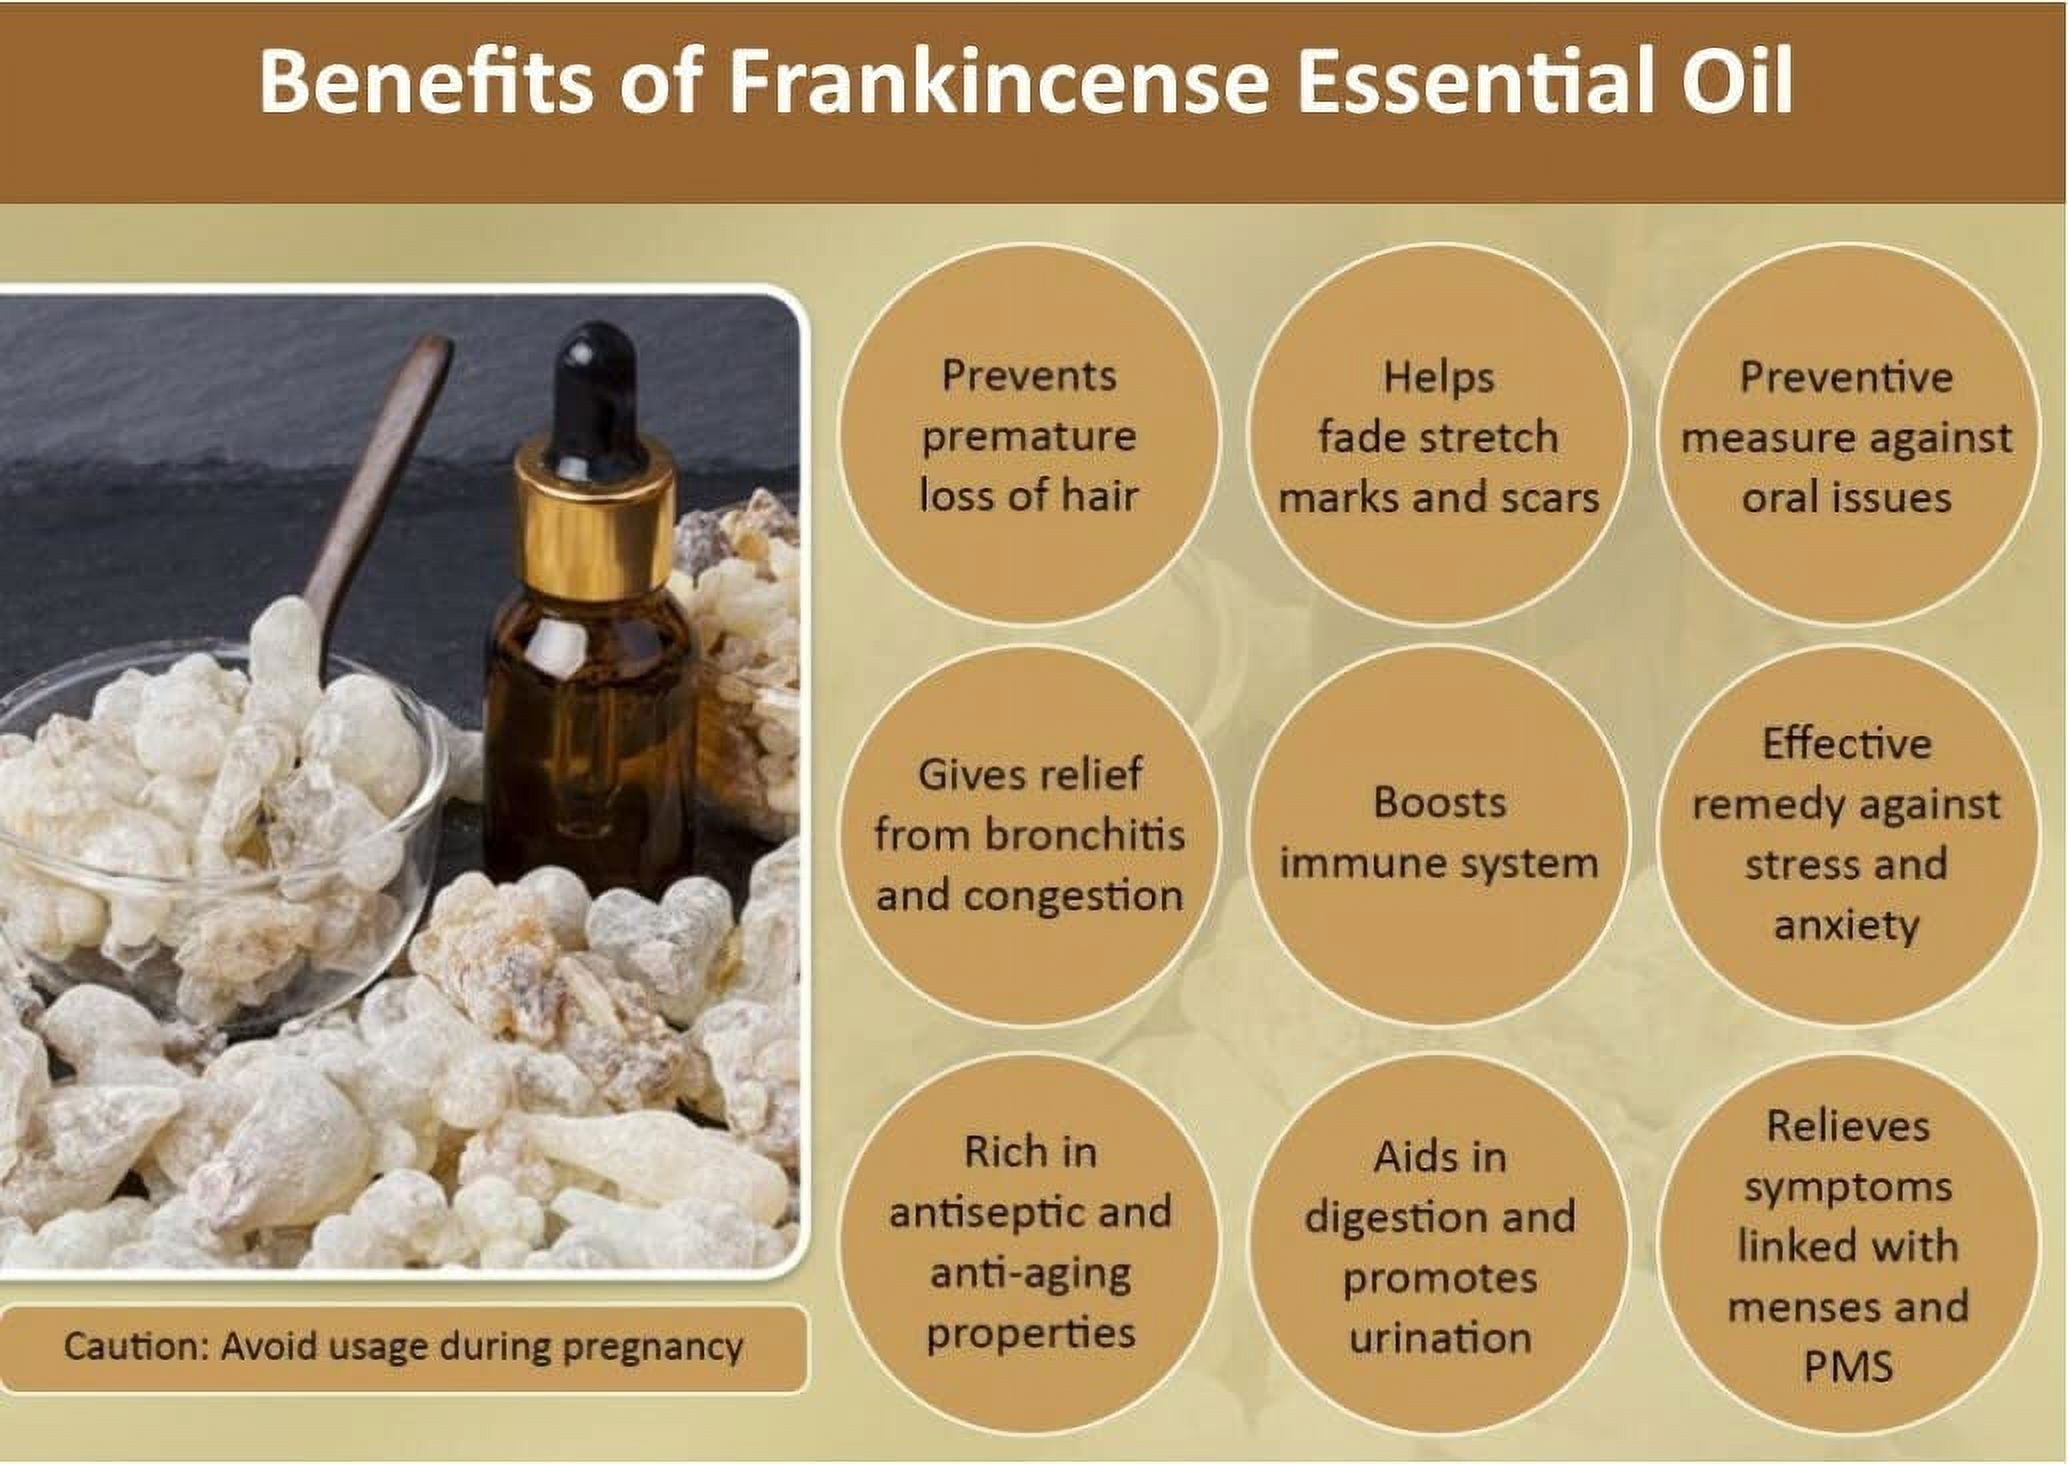 Myrrh Soap With Essential Oil And Raw Resin. – FrankincenseMyrrhTrade